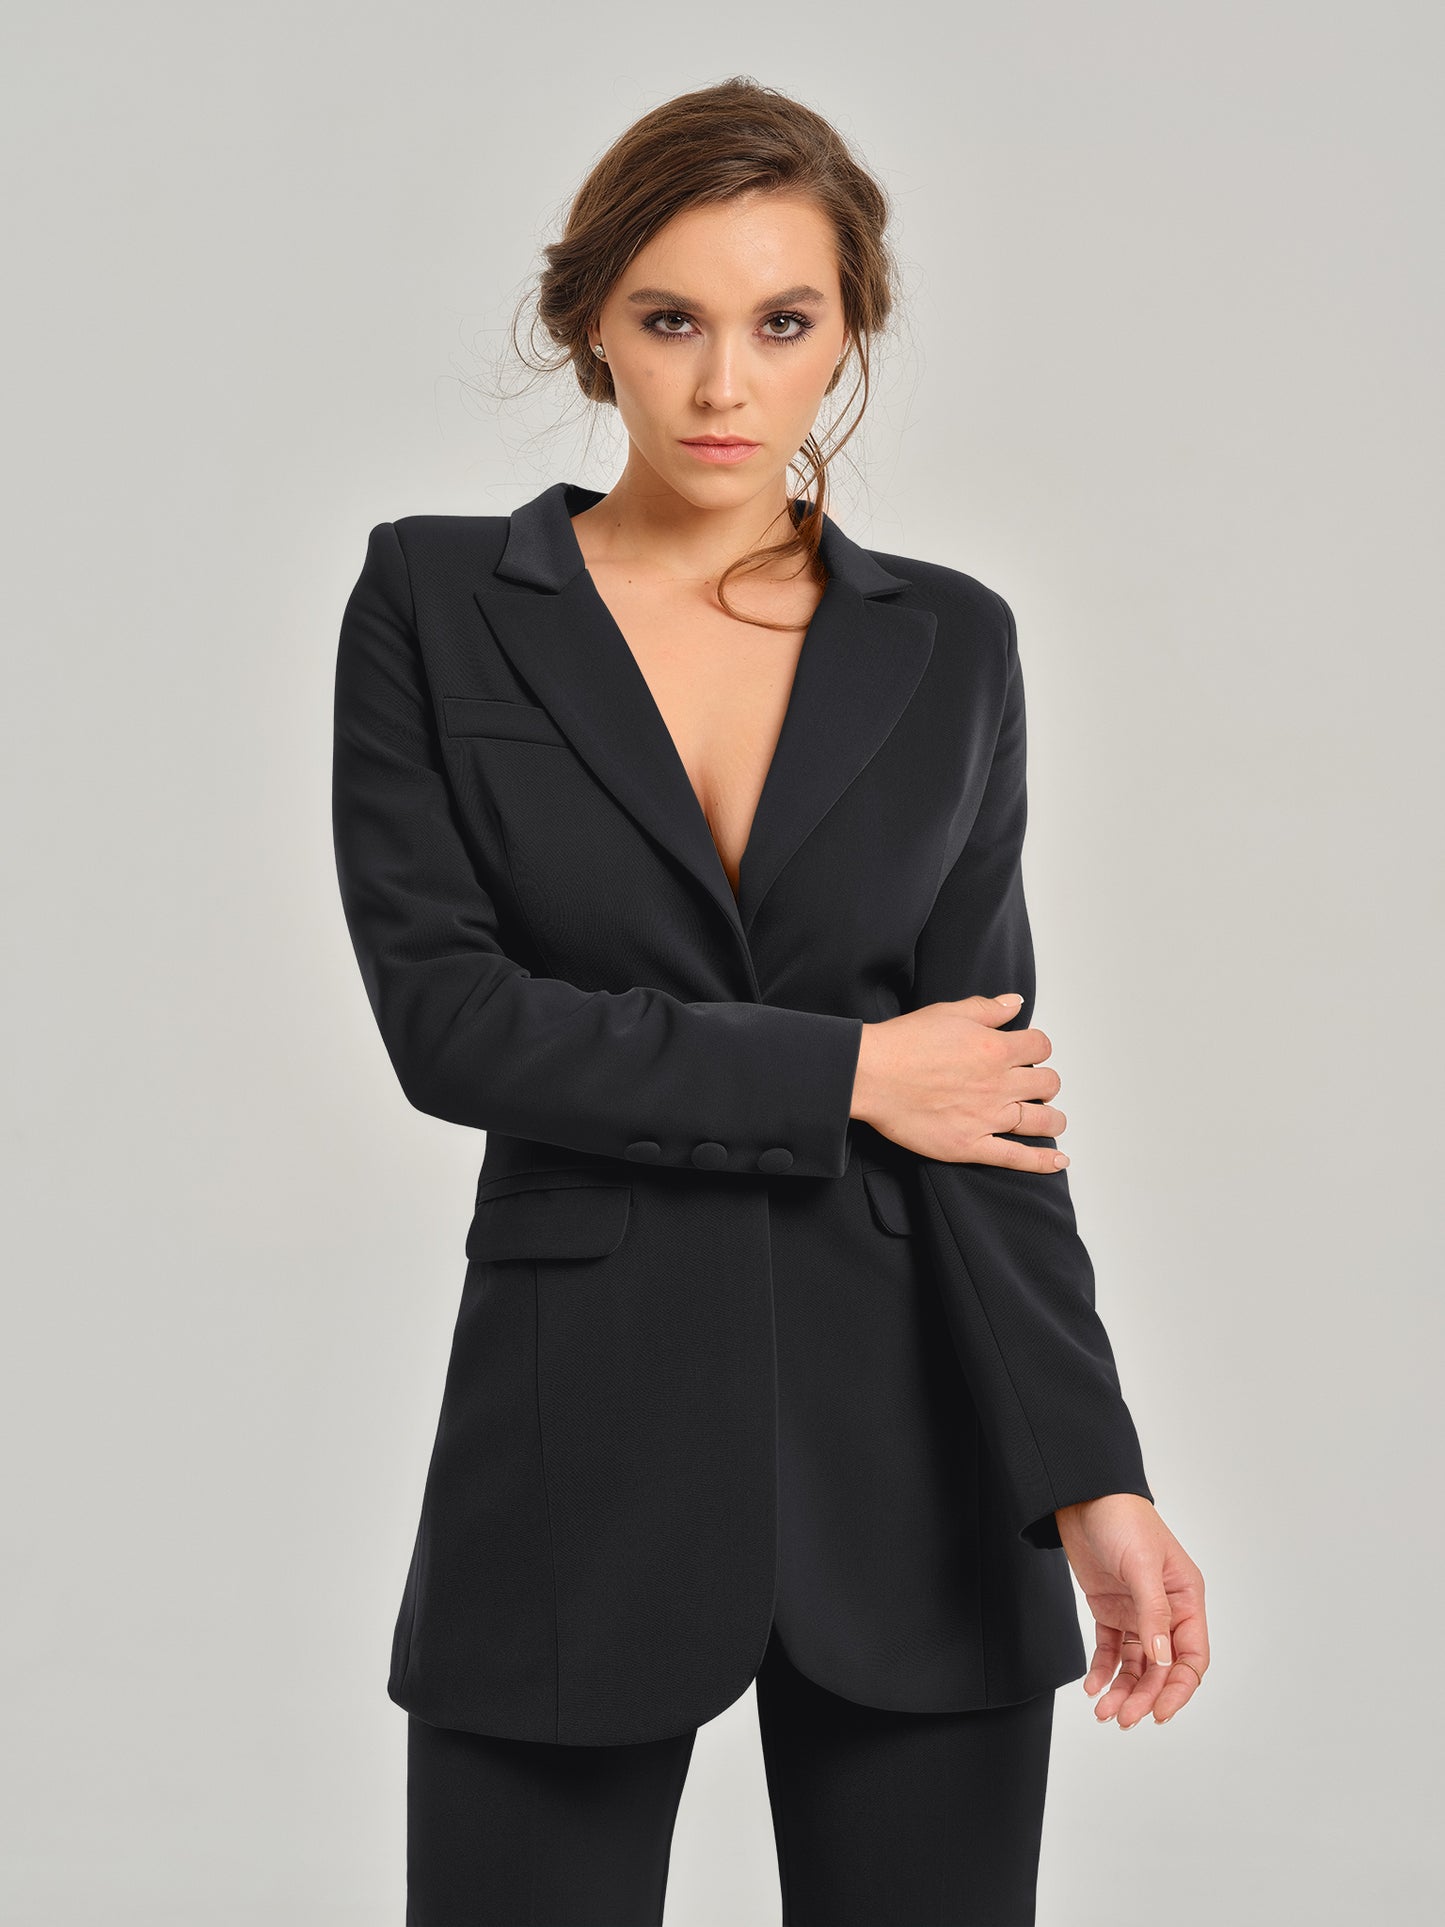 Magnetic Power Timeless Classic Blazer by Tia Dorraine Women's Luxury Fashion Designer Clothing Brand